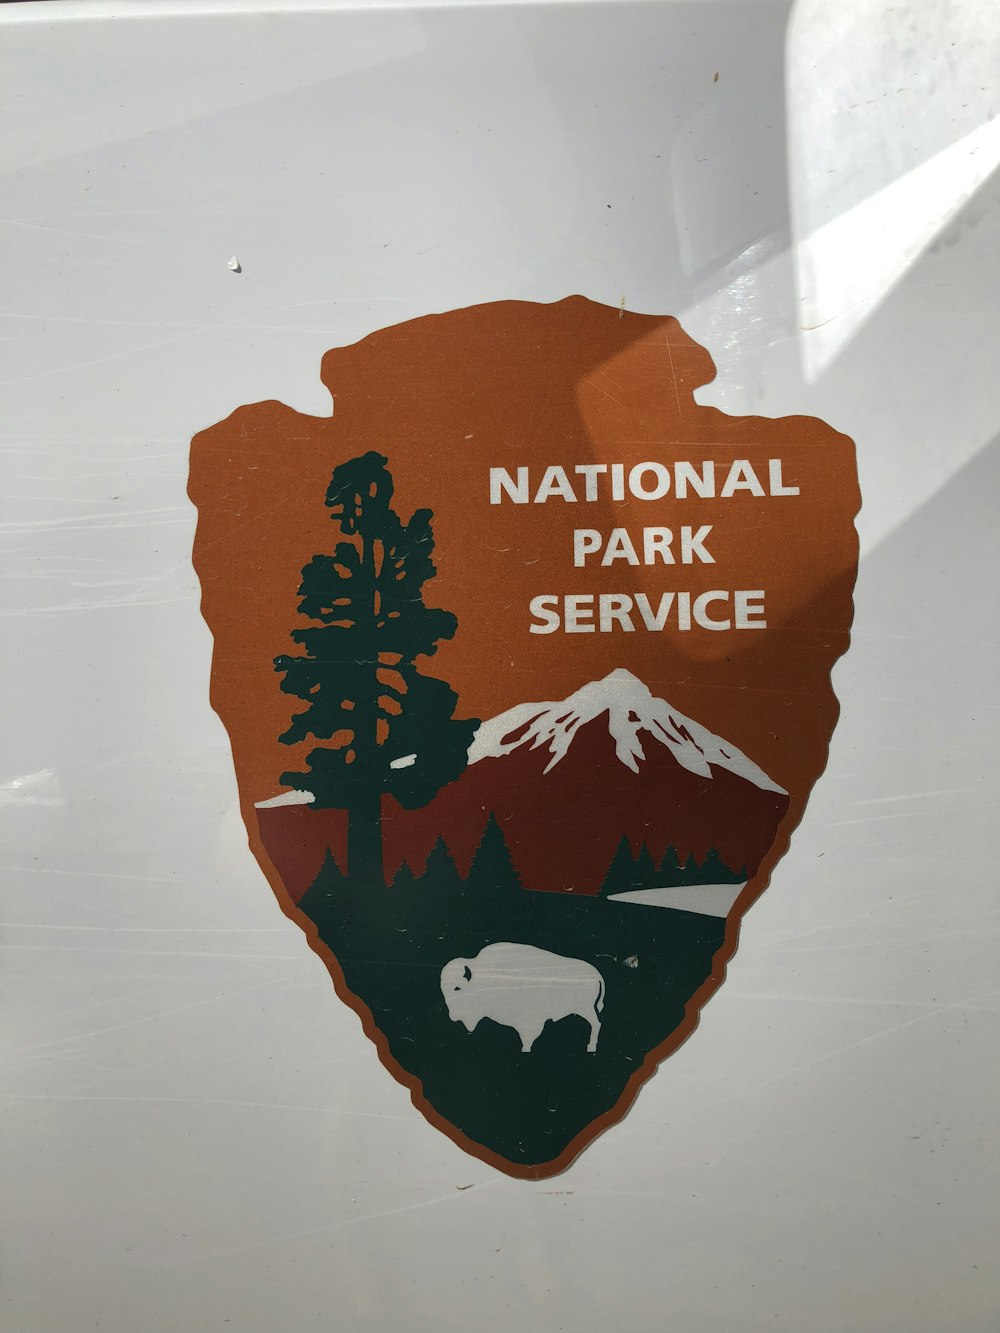 close-up of National Park Service logo